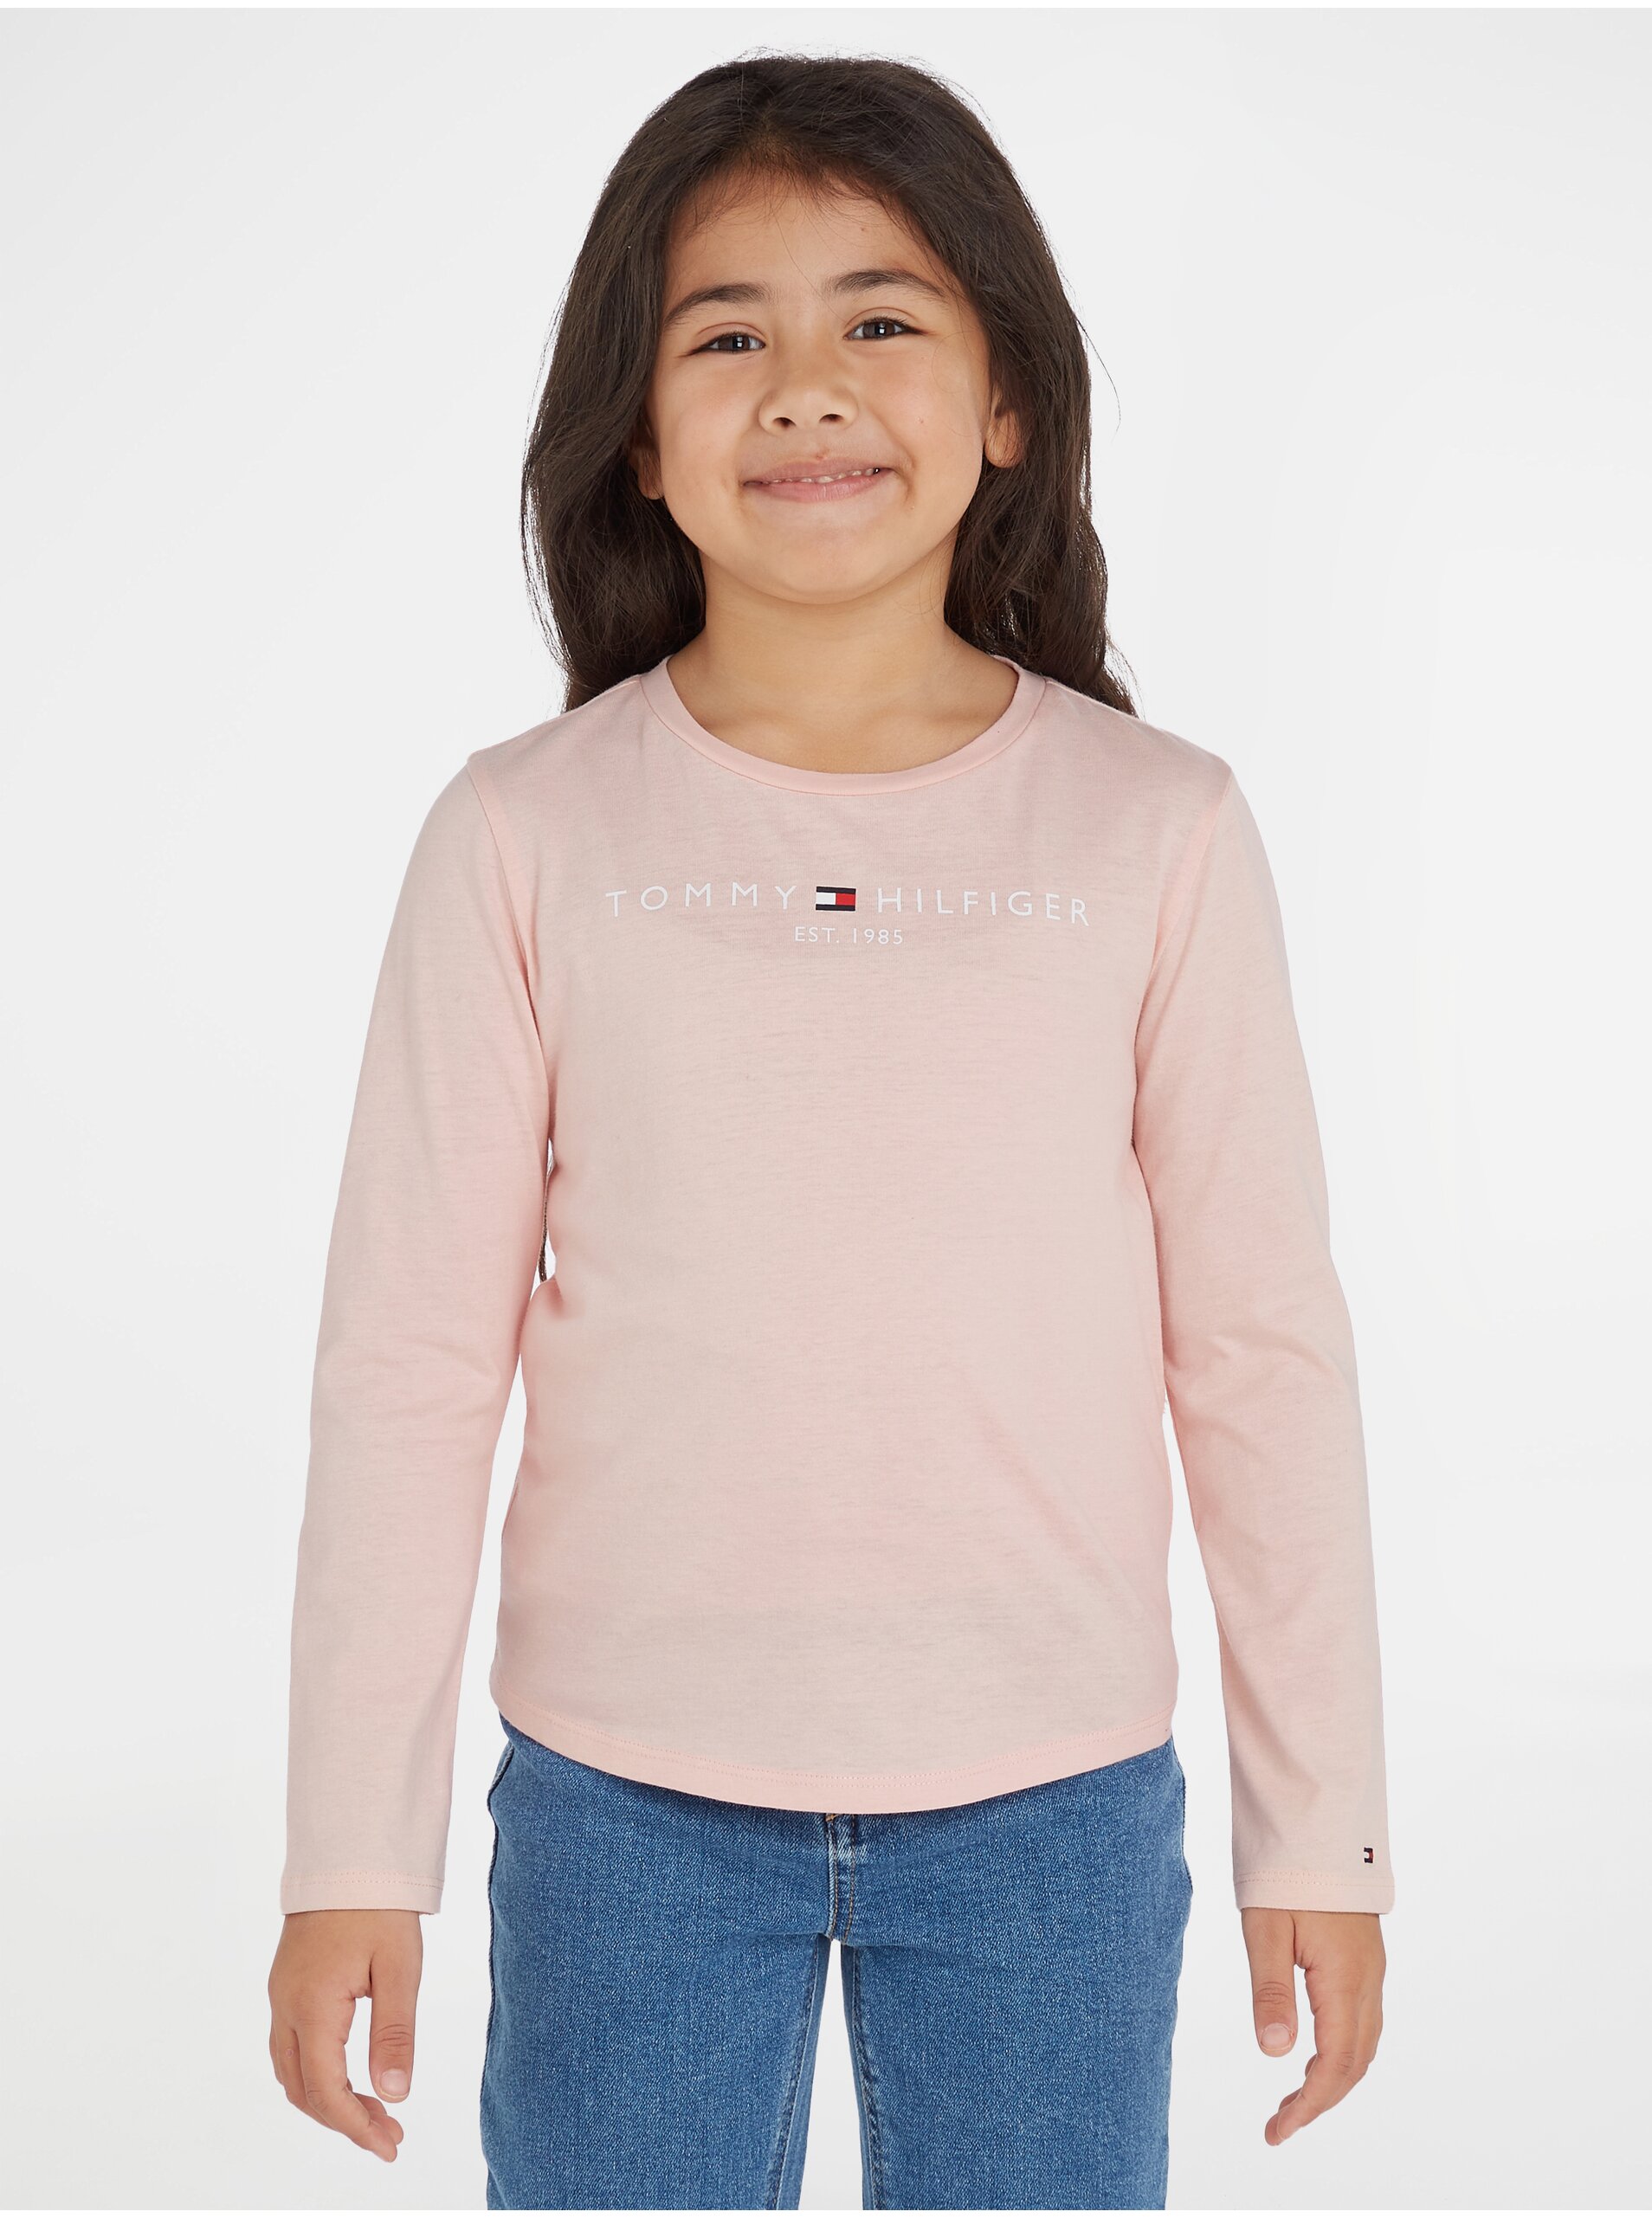 Lacno Ružové dievčenské tričko Tommy Hilfiger